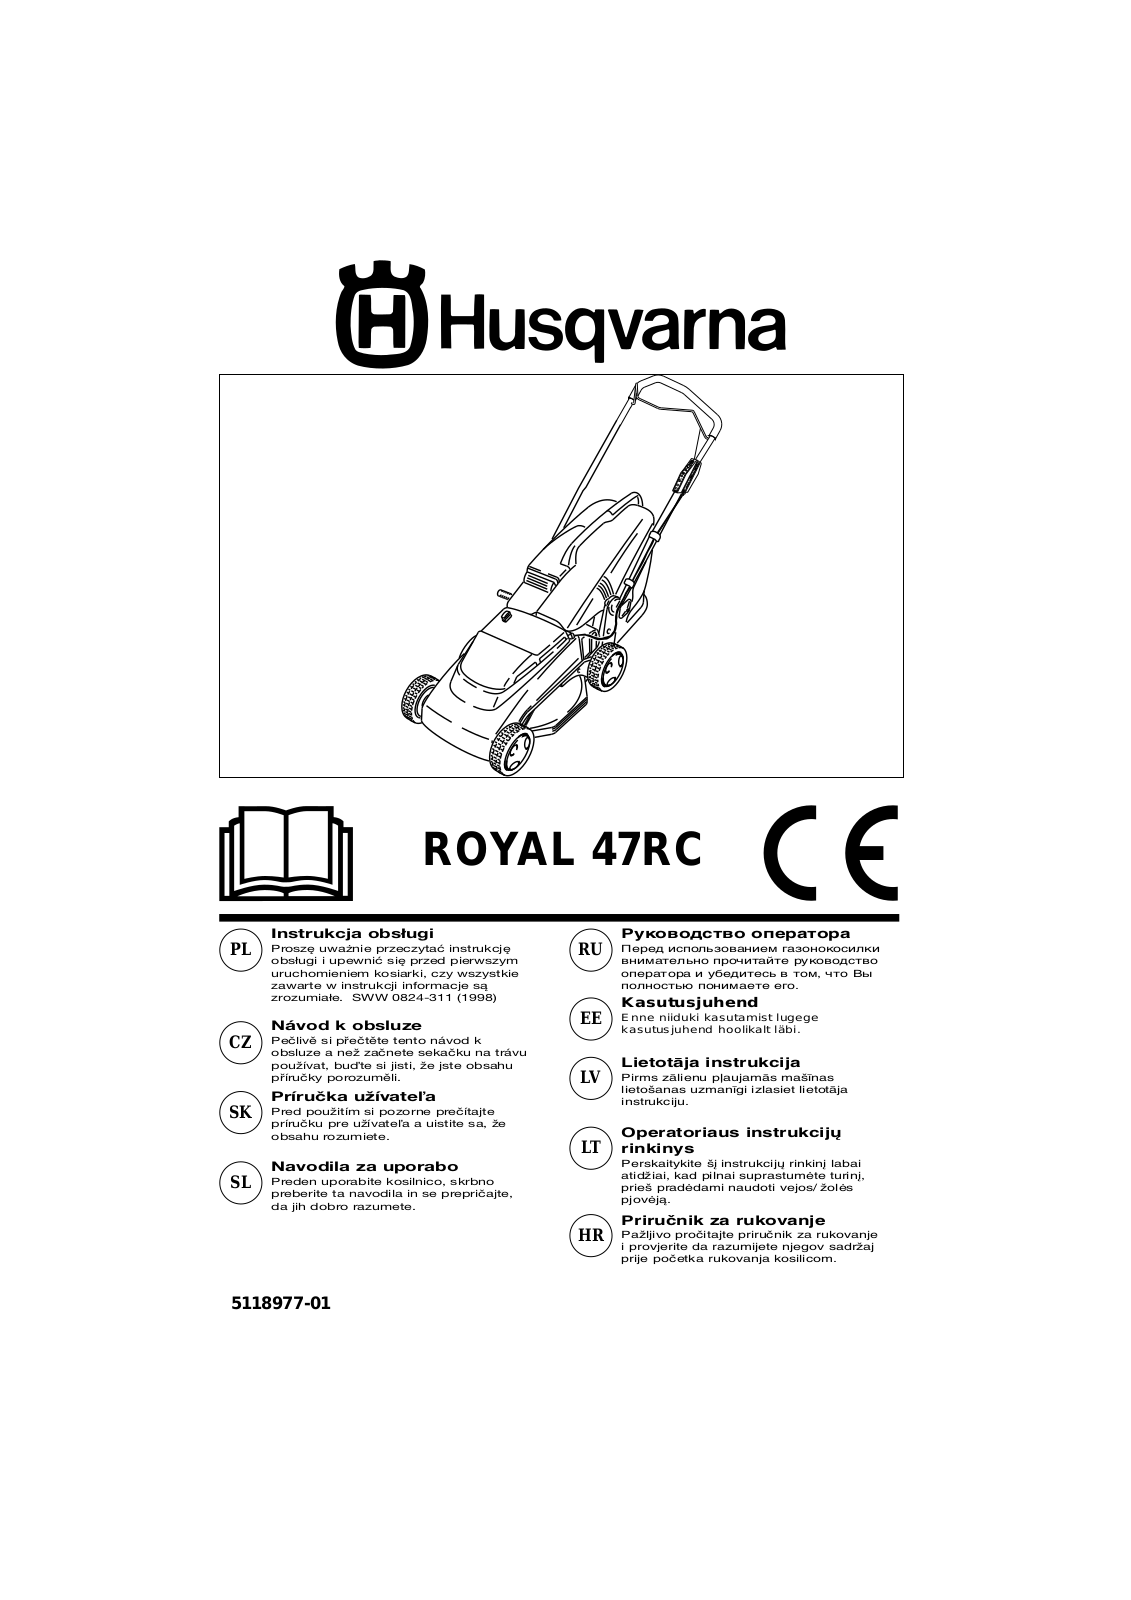 Husqvarna ROYAL 47 RC User Manual